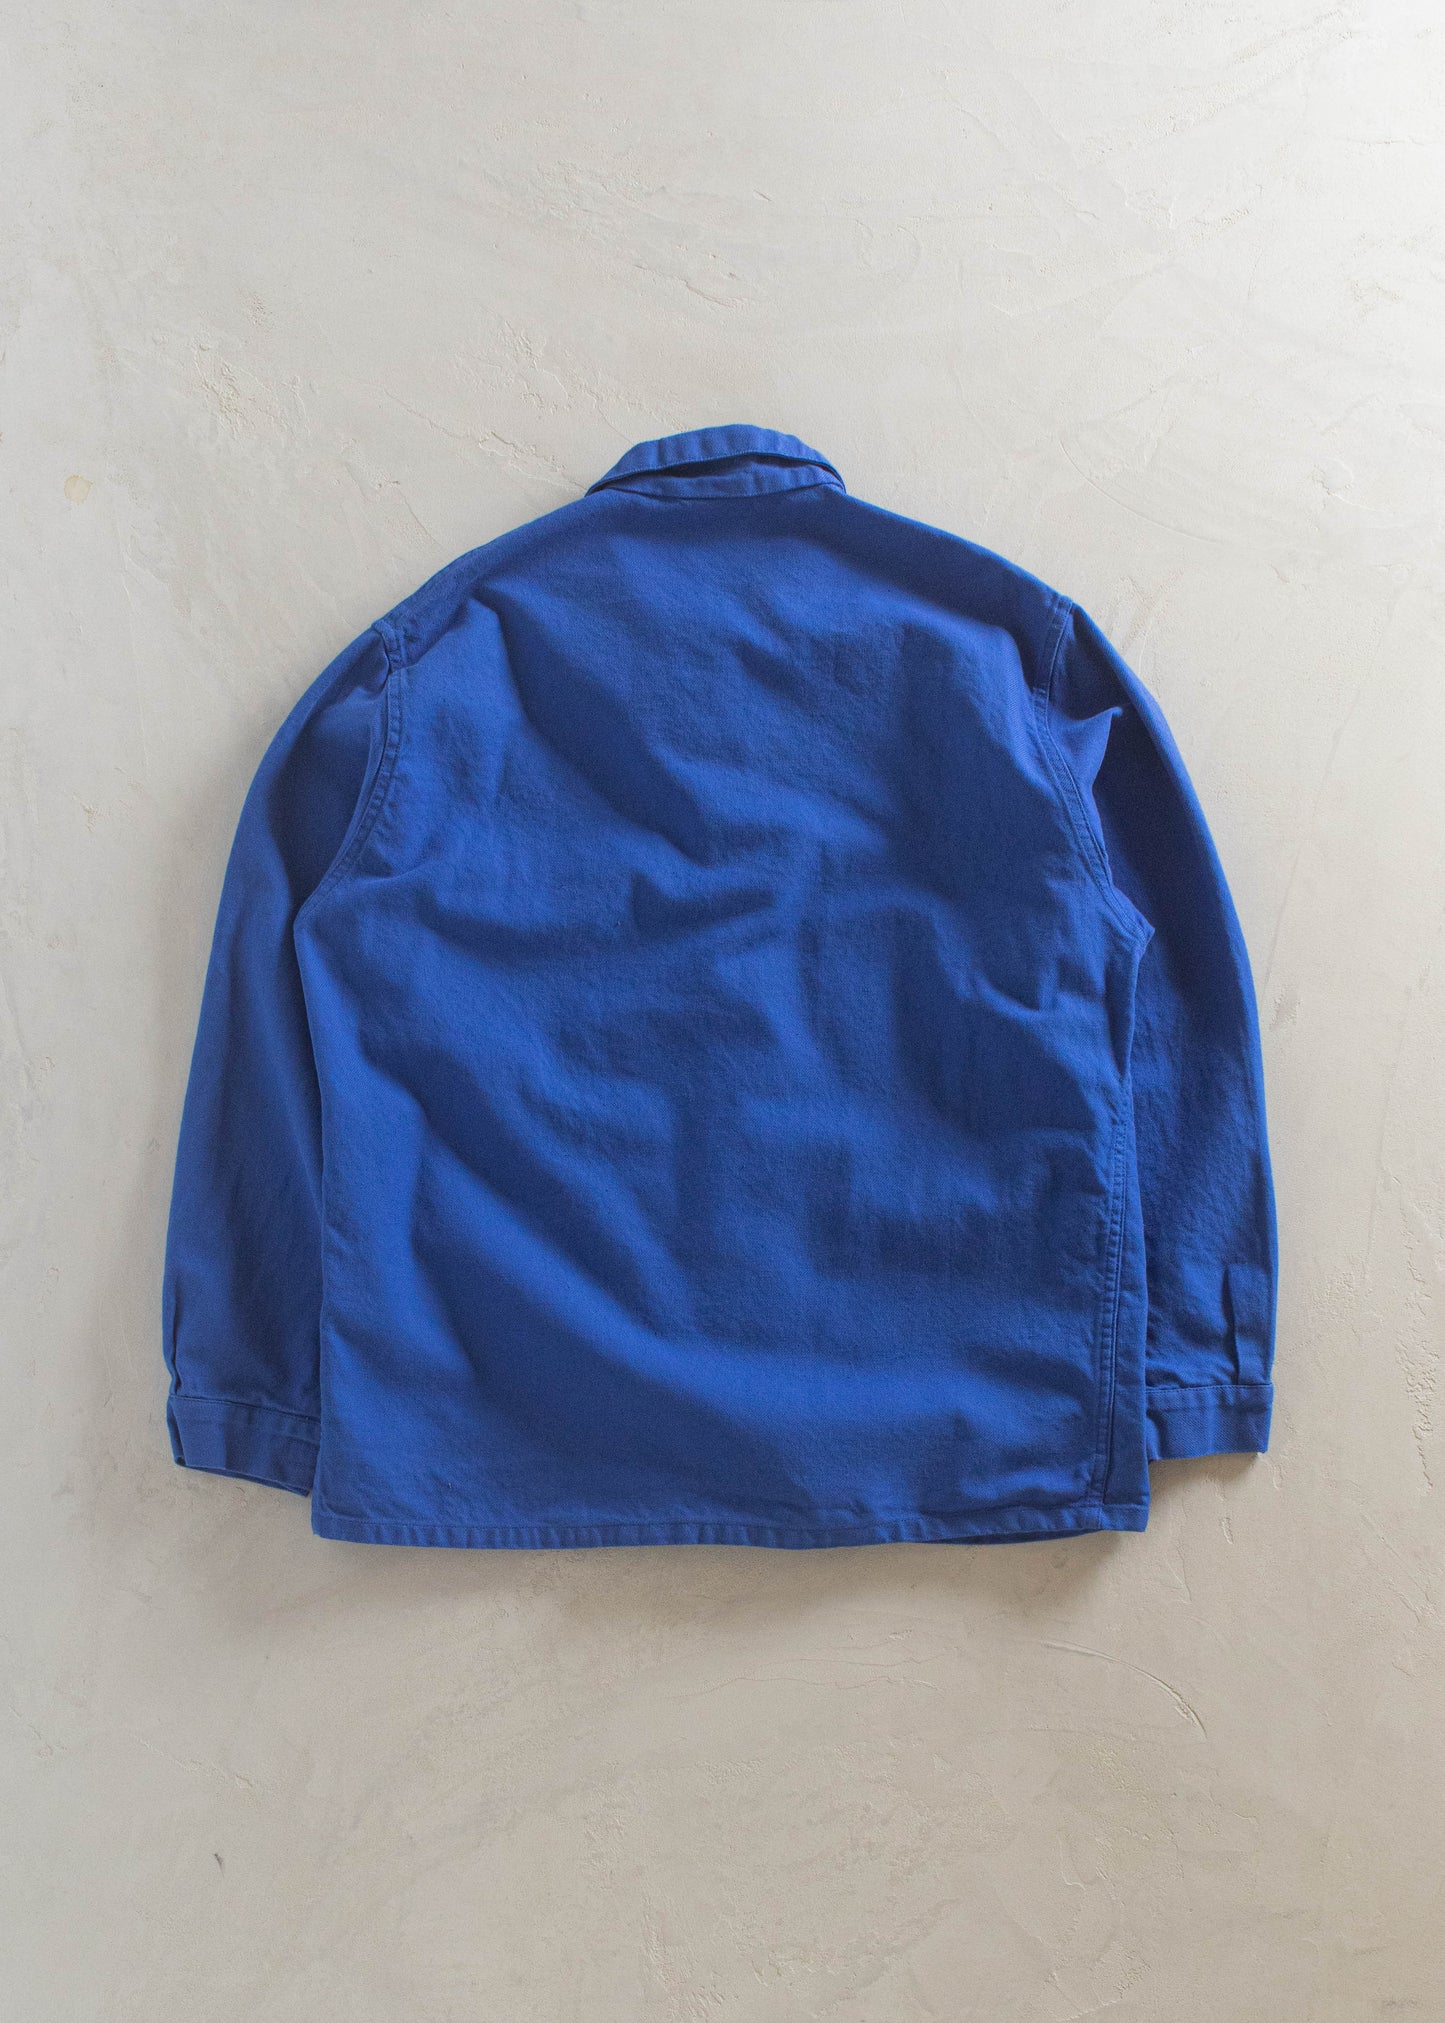 1980s Adolphe Lafont French Workwear Chore Jacket Size M/L